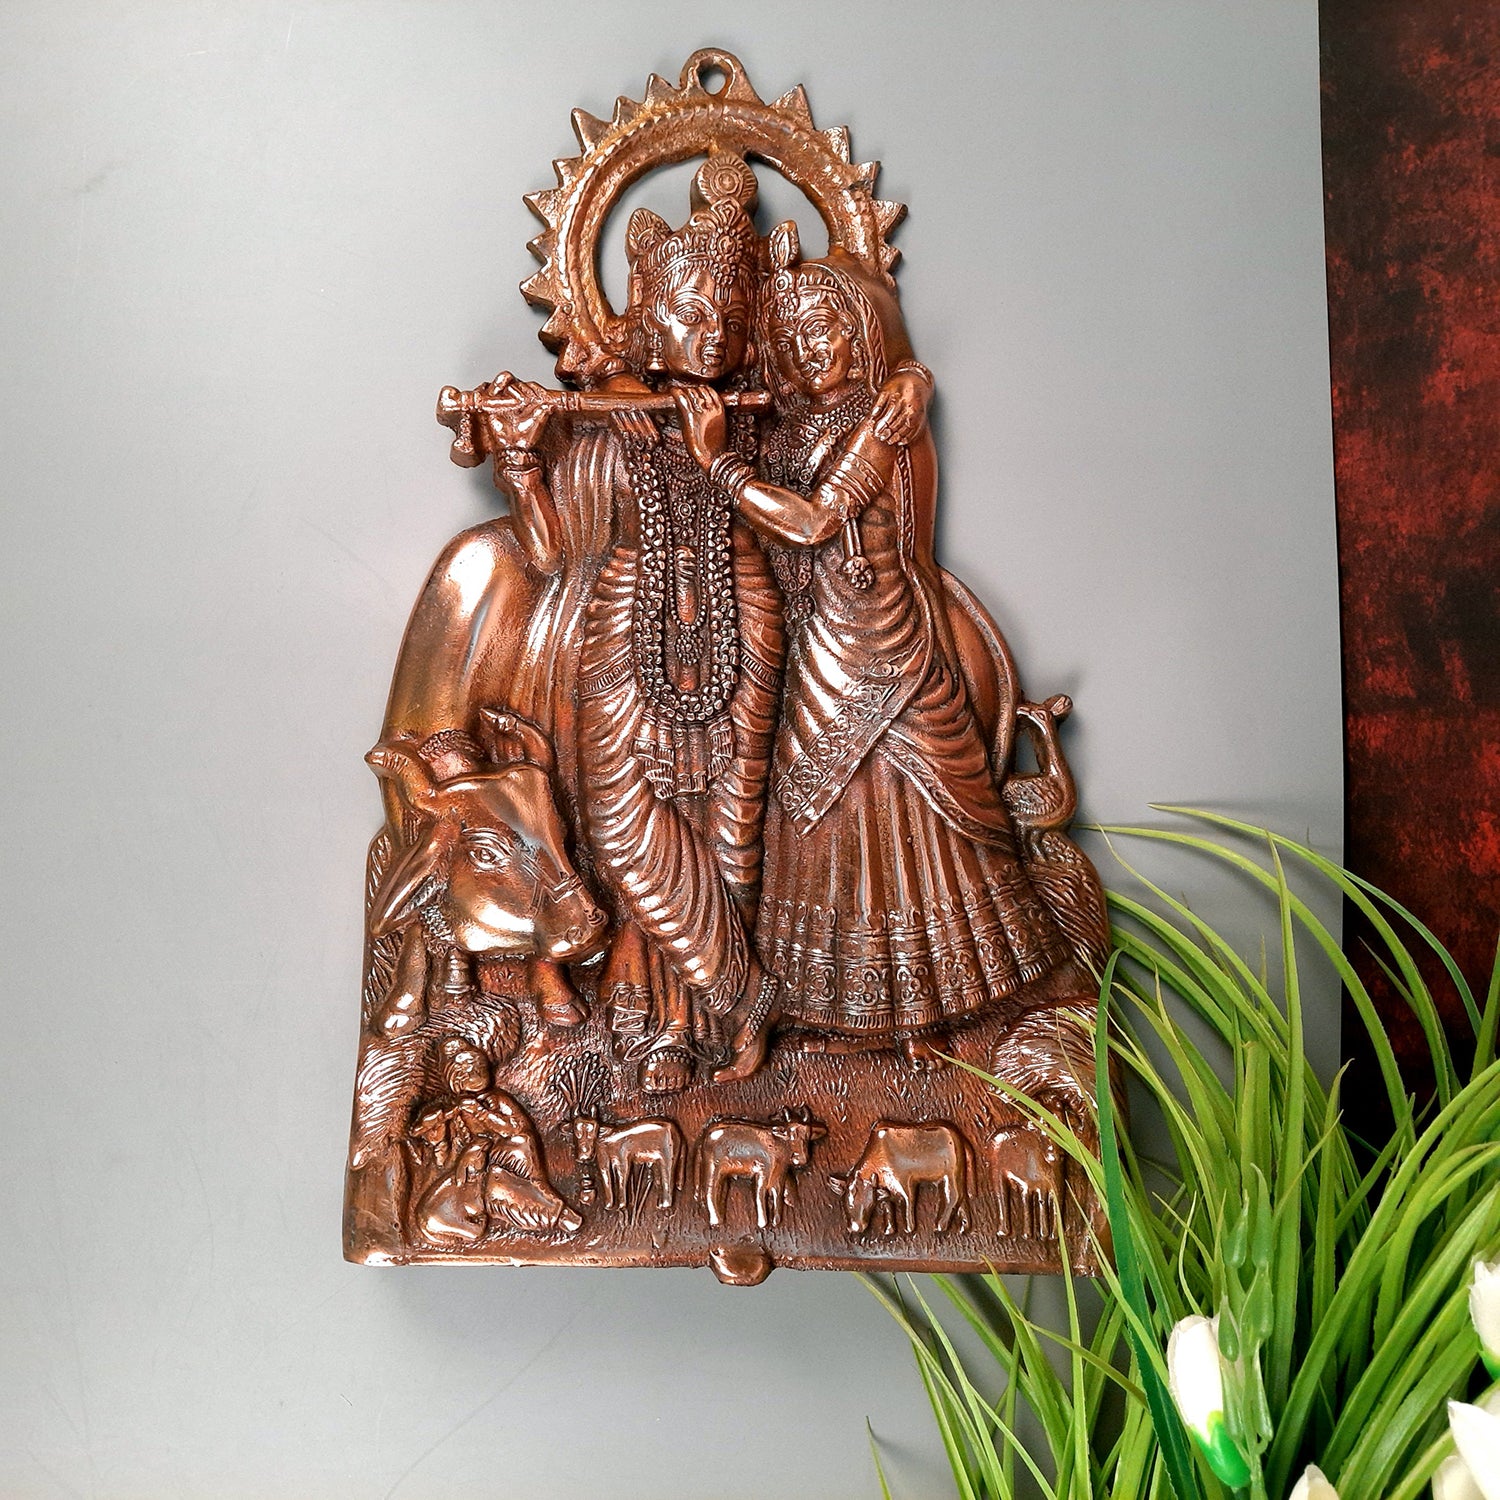 Radha Krishna Idol Wall Hanging Art | Radhe Krishna Wall Statue Murti | Wedding Gift for Couples | Religious Gift - for Home, Living Room, Office, Puja , Entrance Decoration - 15 Inch - Apkamart